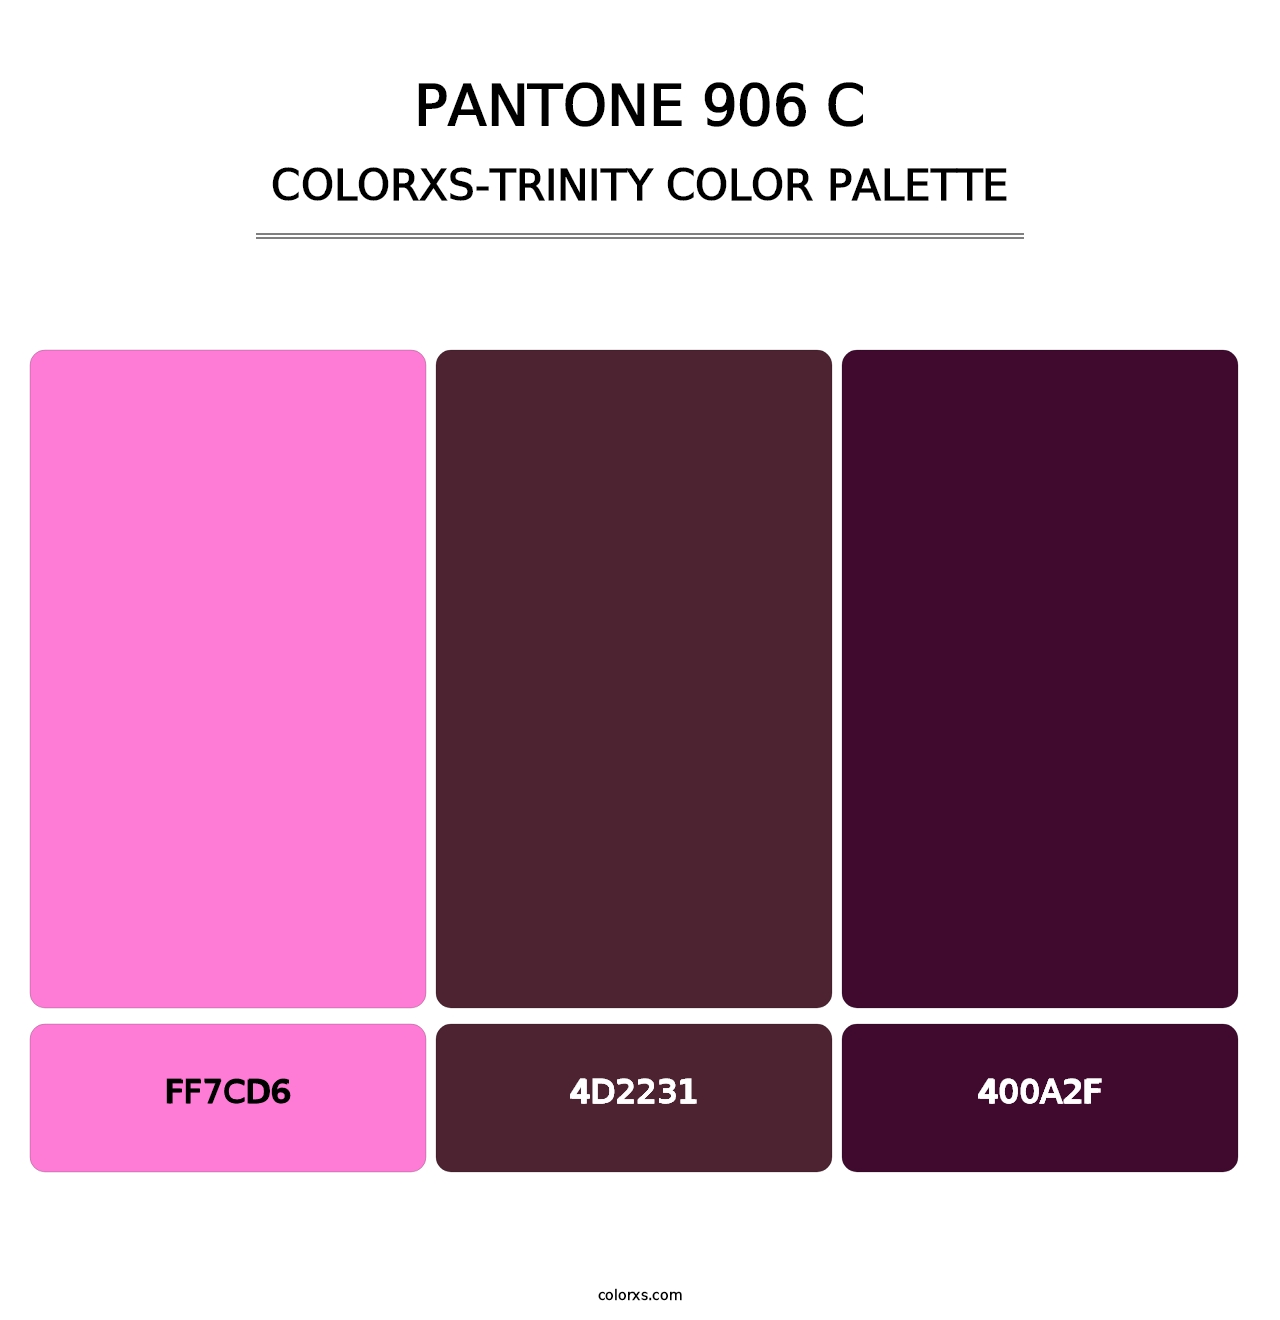 PANTONE 906 C - Colorxs Trinity Palette